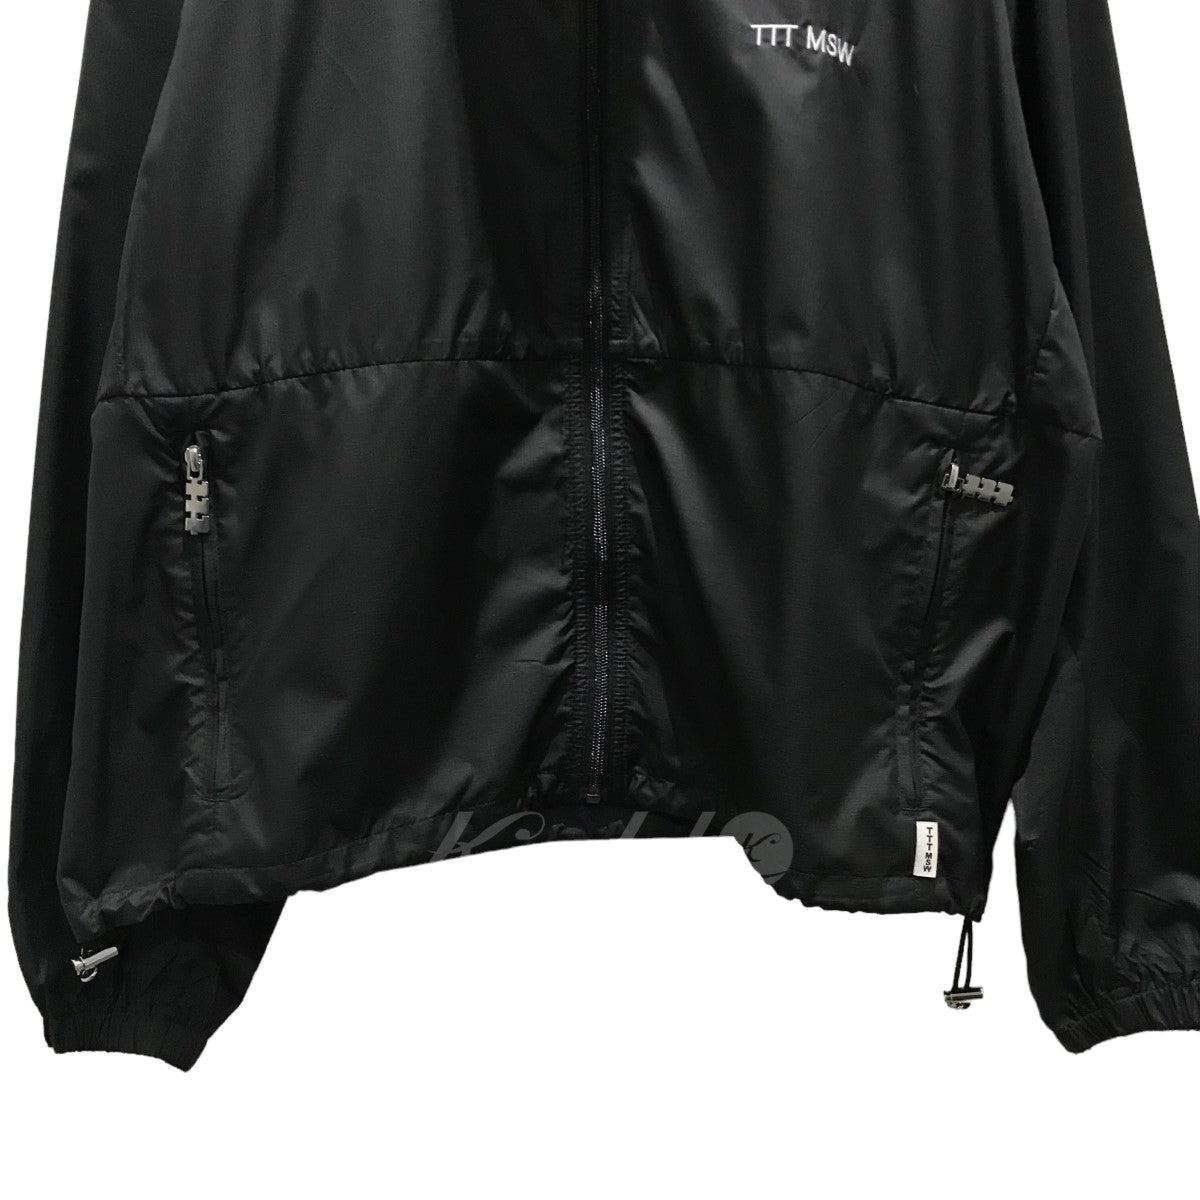 TTT MSW(ティー) ロゴ刺繍トラックジャケット